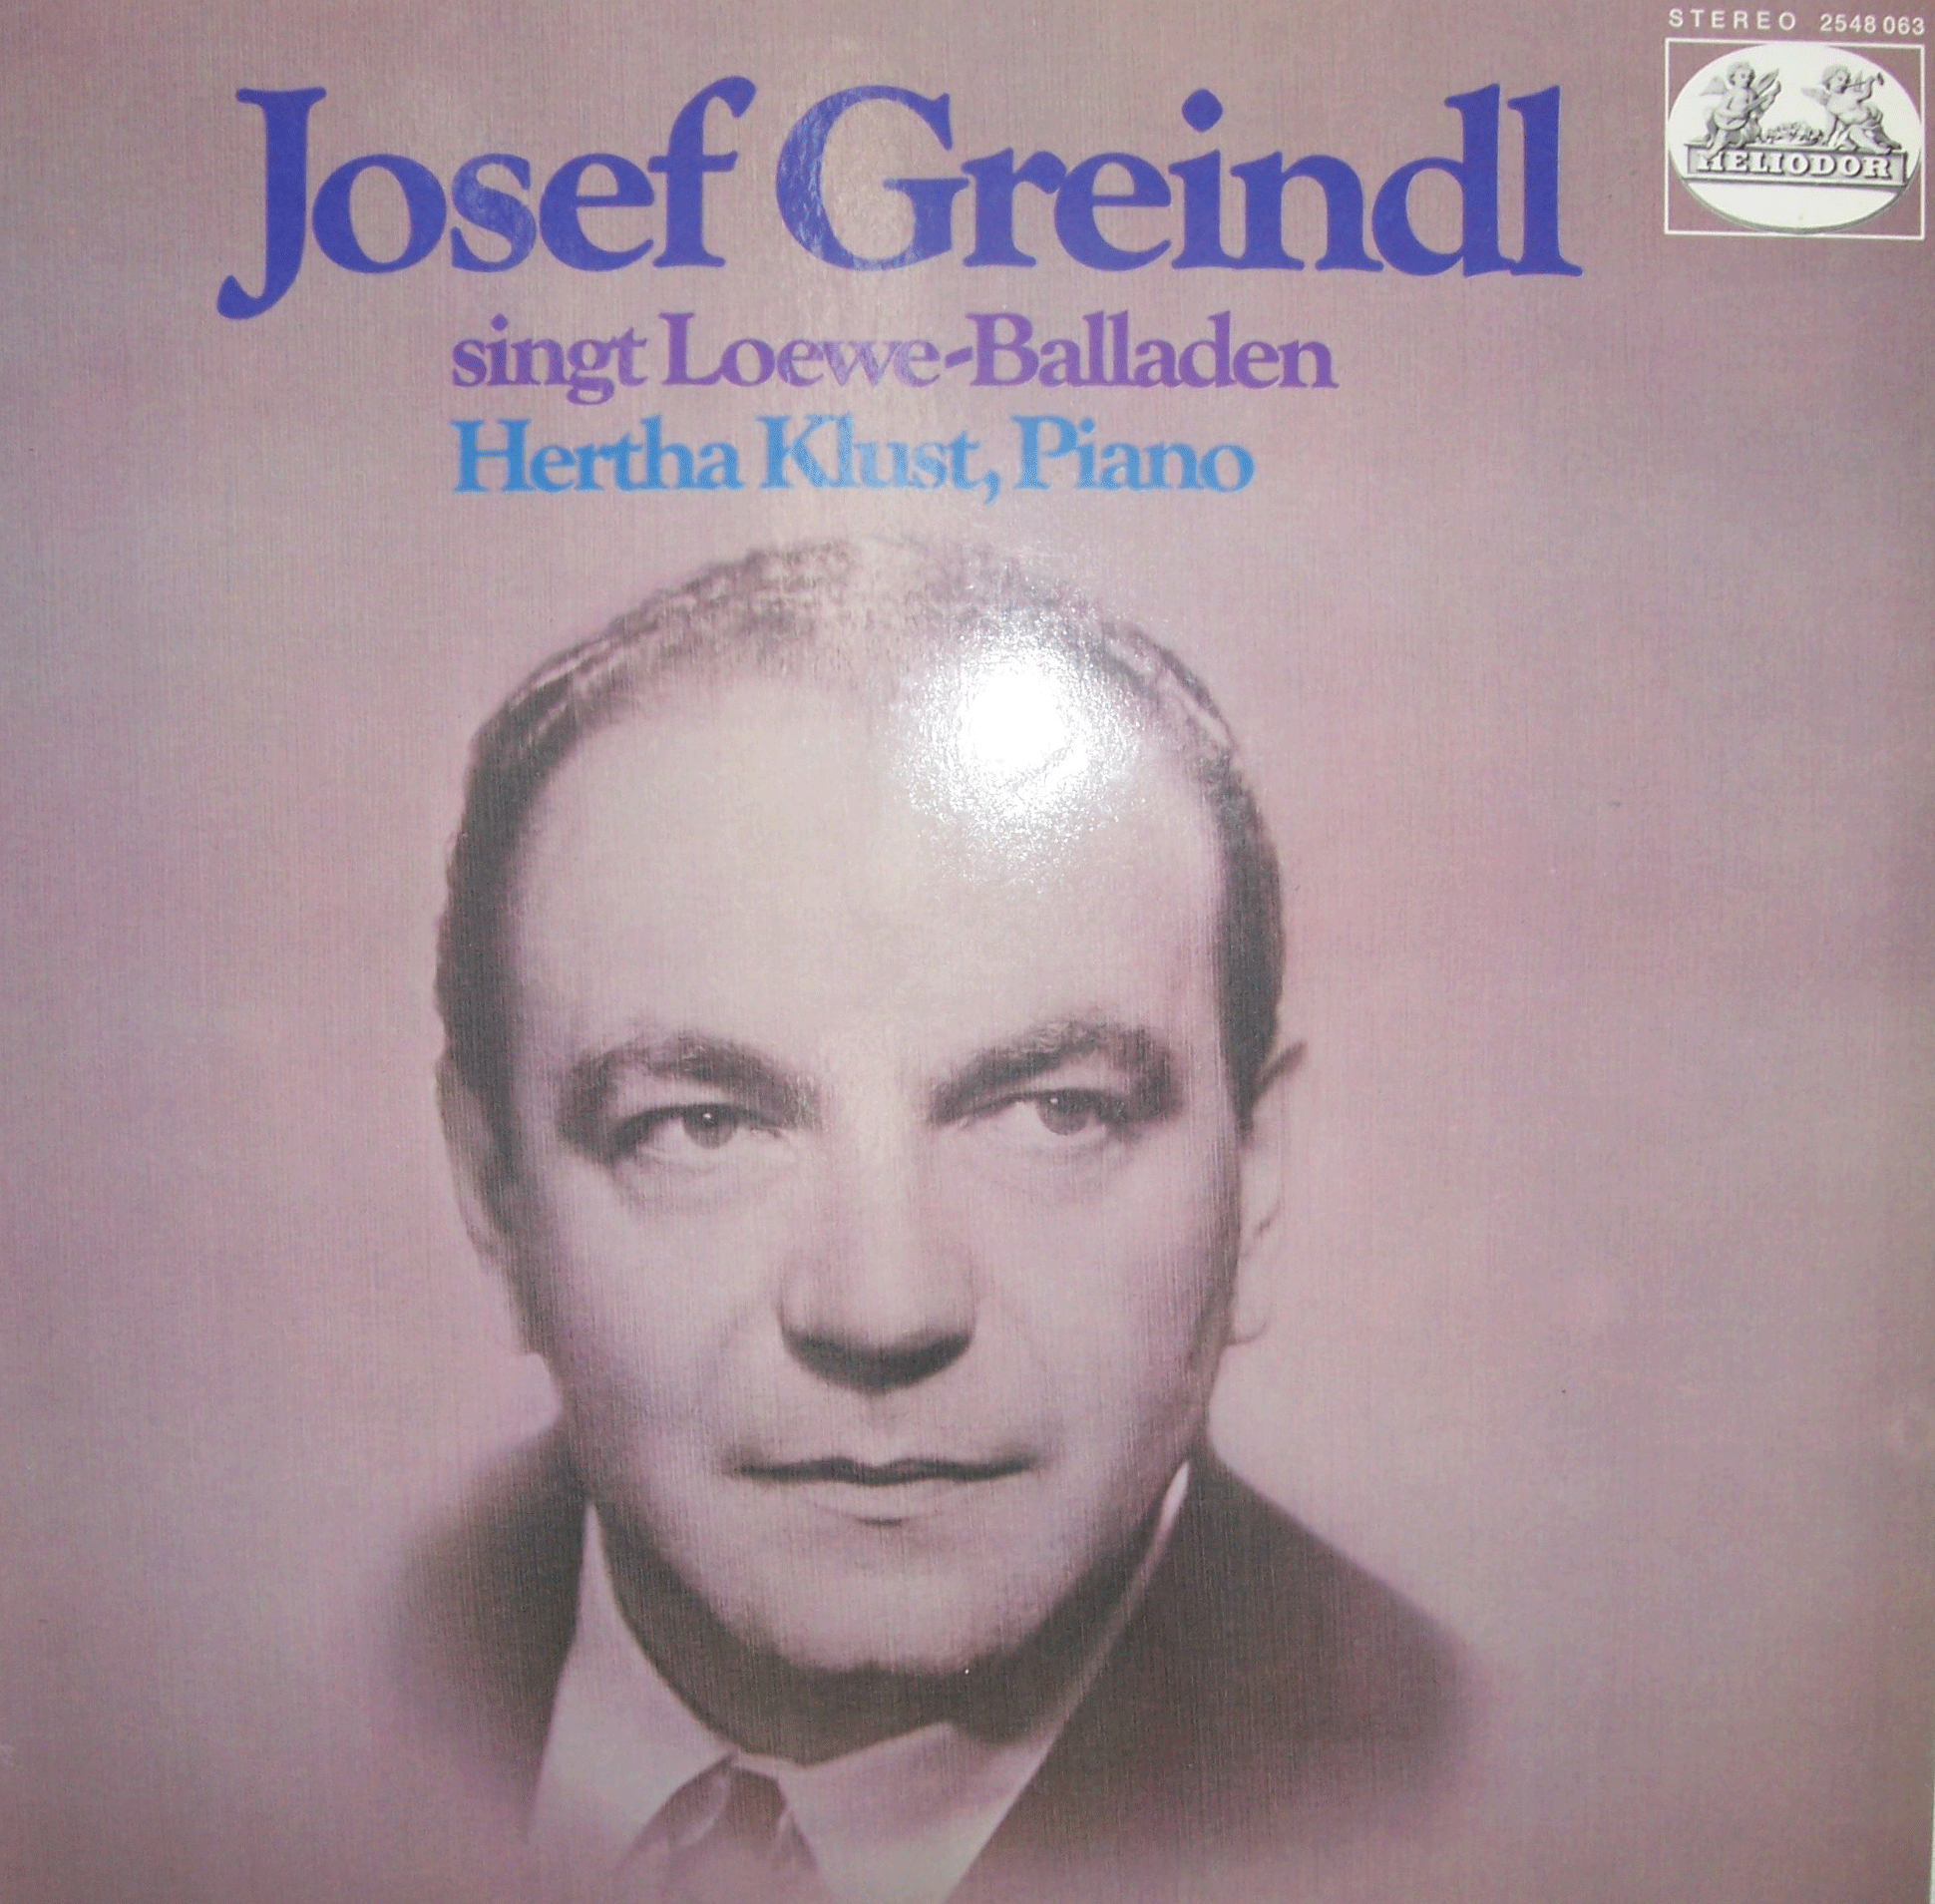 Pochette CD de Josef Greindl. [Heliodor]